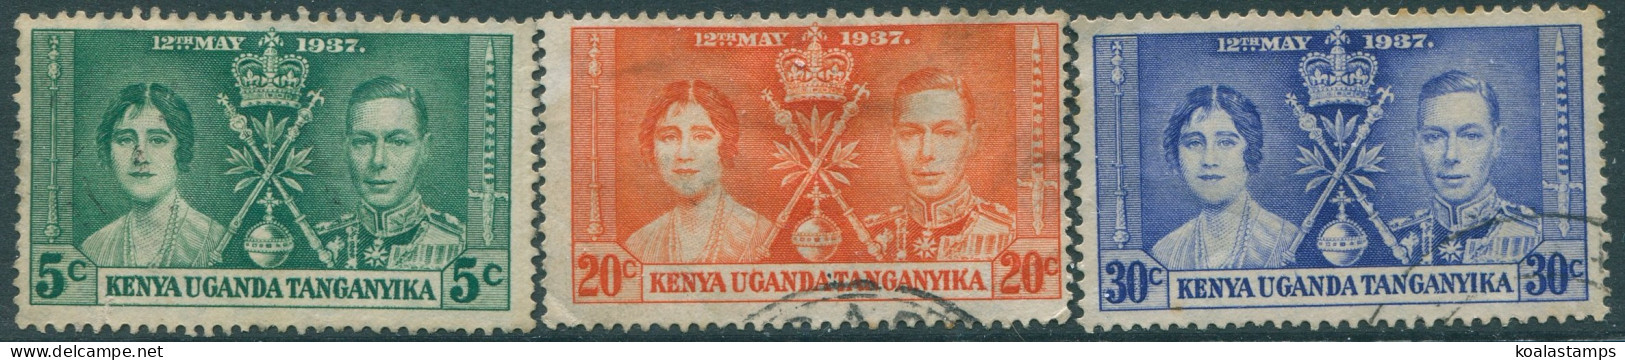 Kenya Uganda And Tanganyika 1937 SG128-130 KGVI Coronation Set FU (amd) - Kenya, Oeganda & Tanganyika